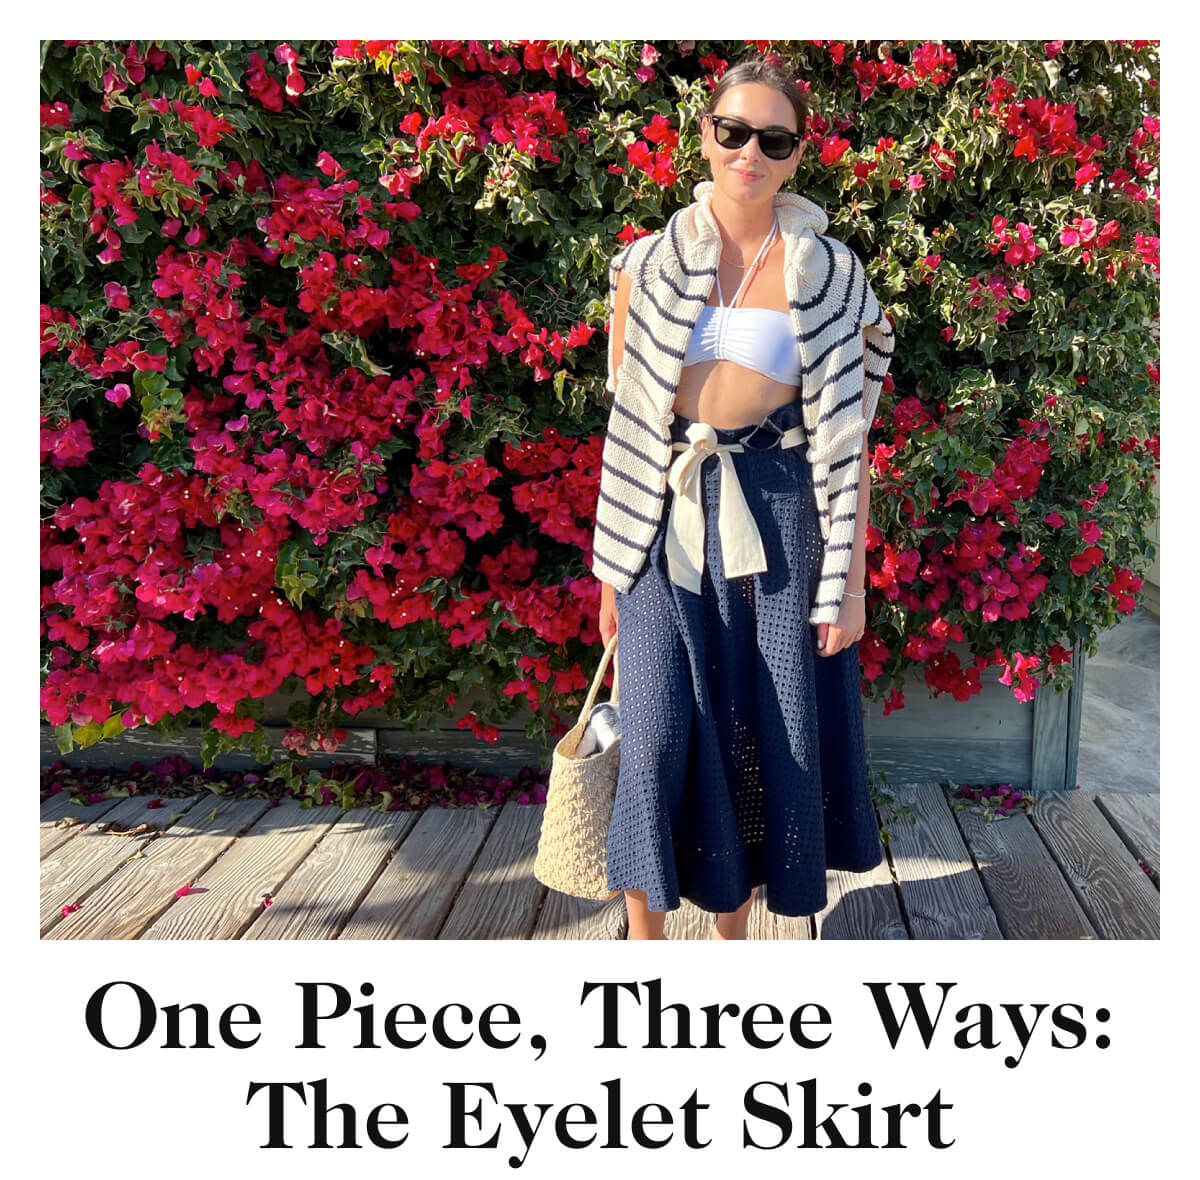 One Piece, Three Ways: The Eyelet Skirt